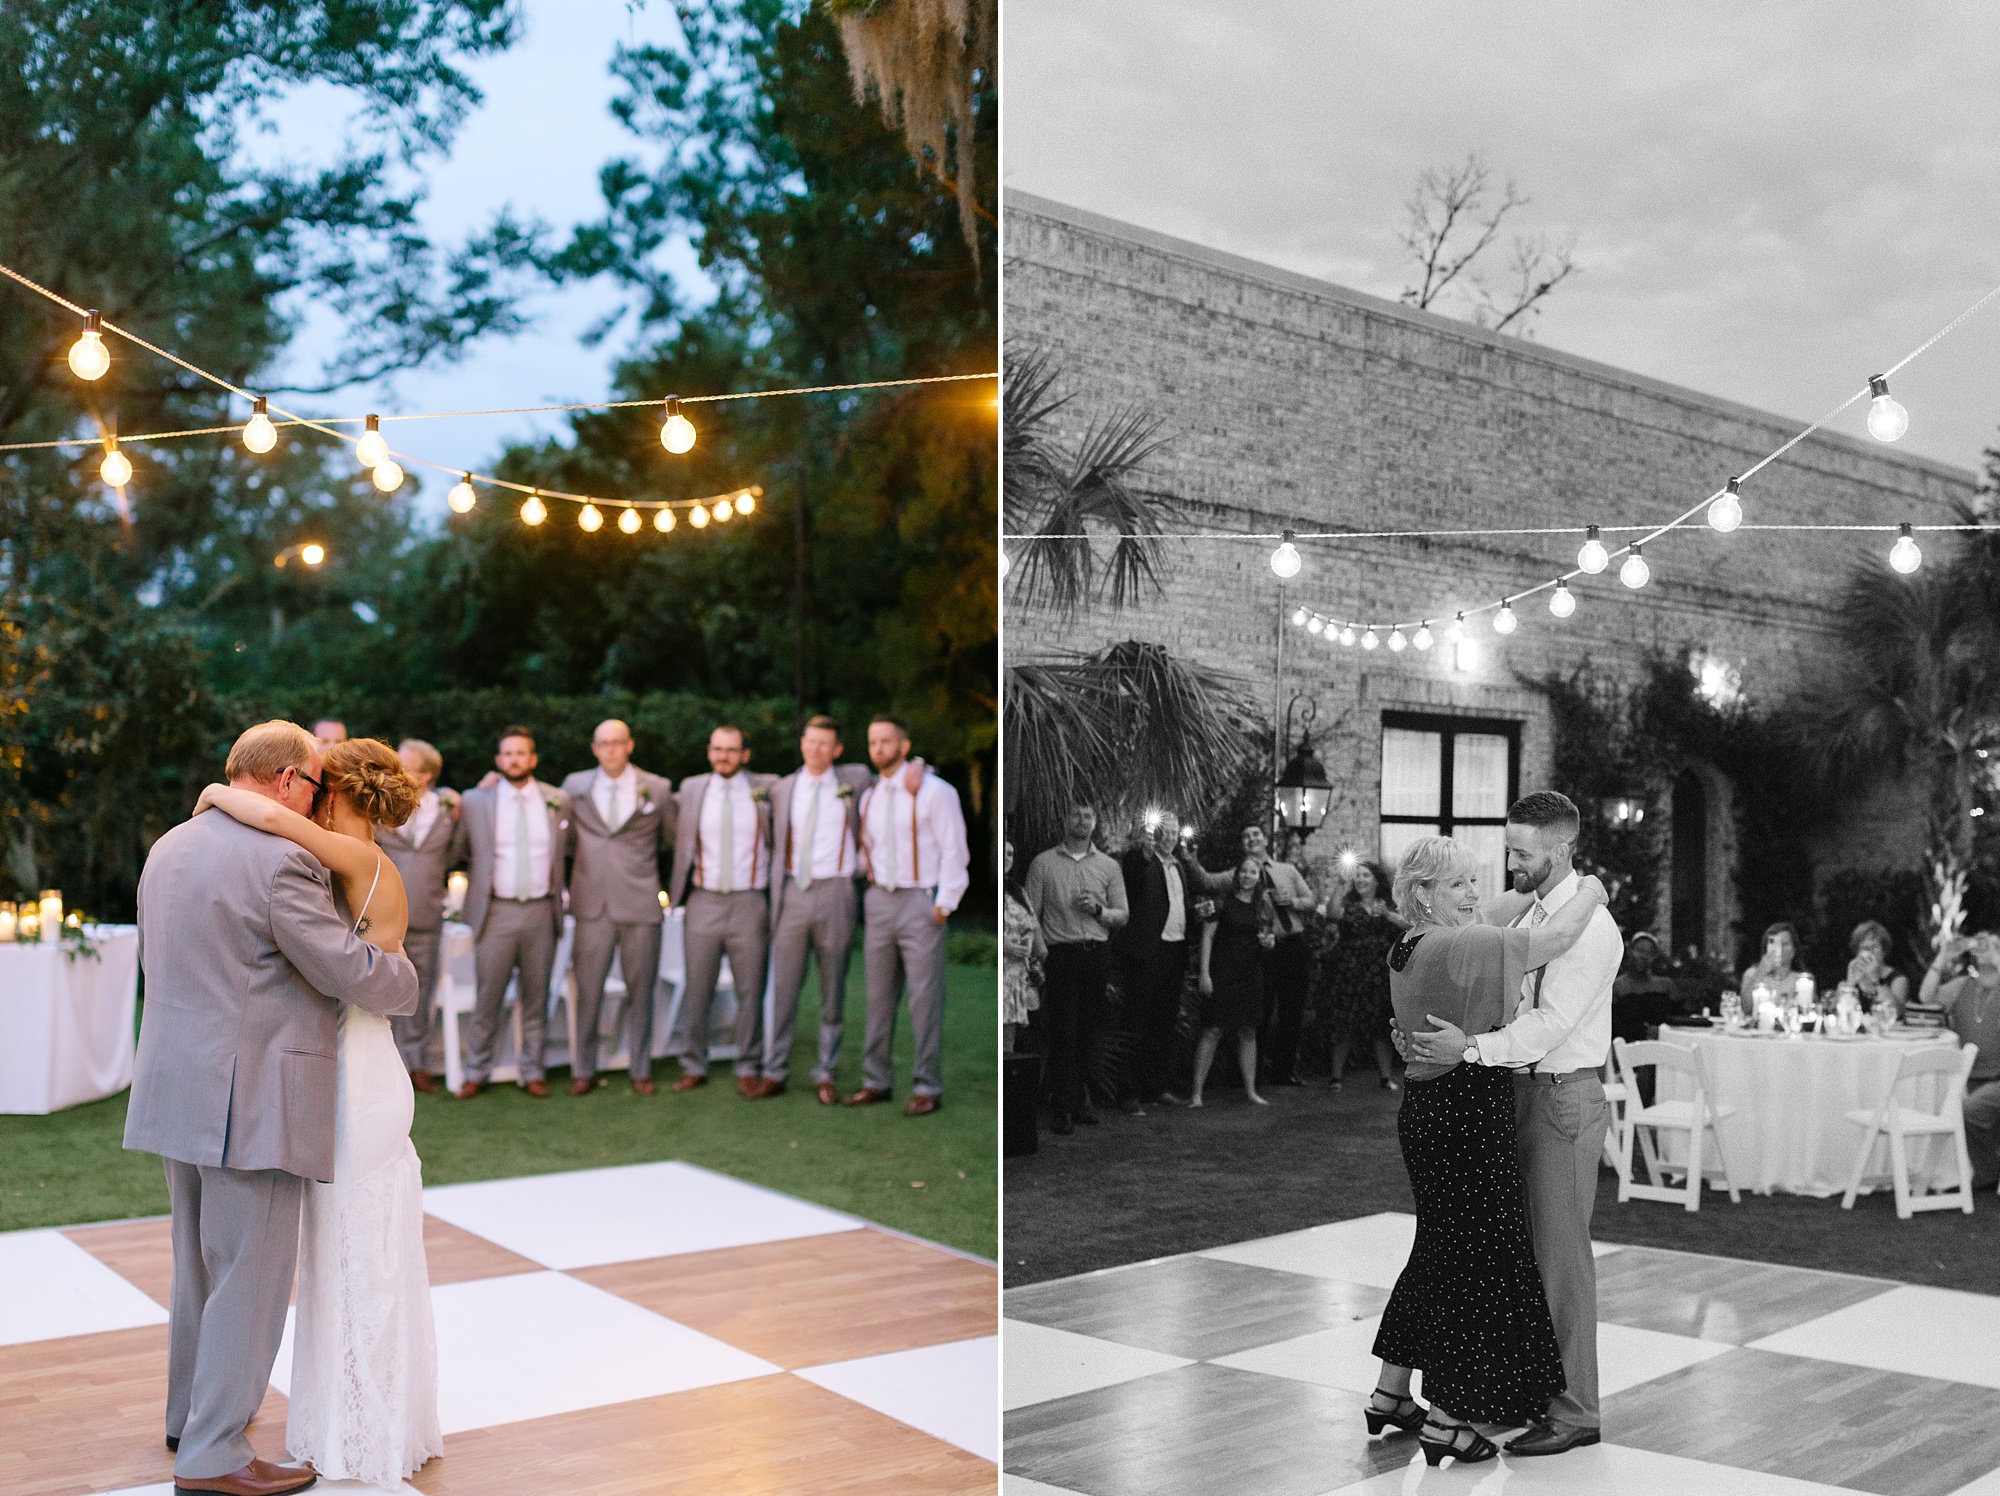 bride and dad dance on checkered dance floor during garden wedding reception